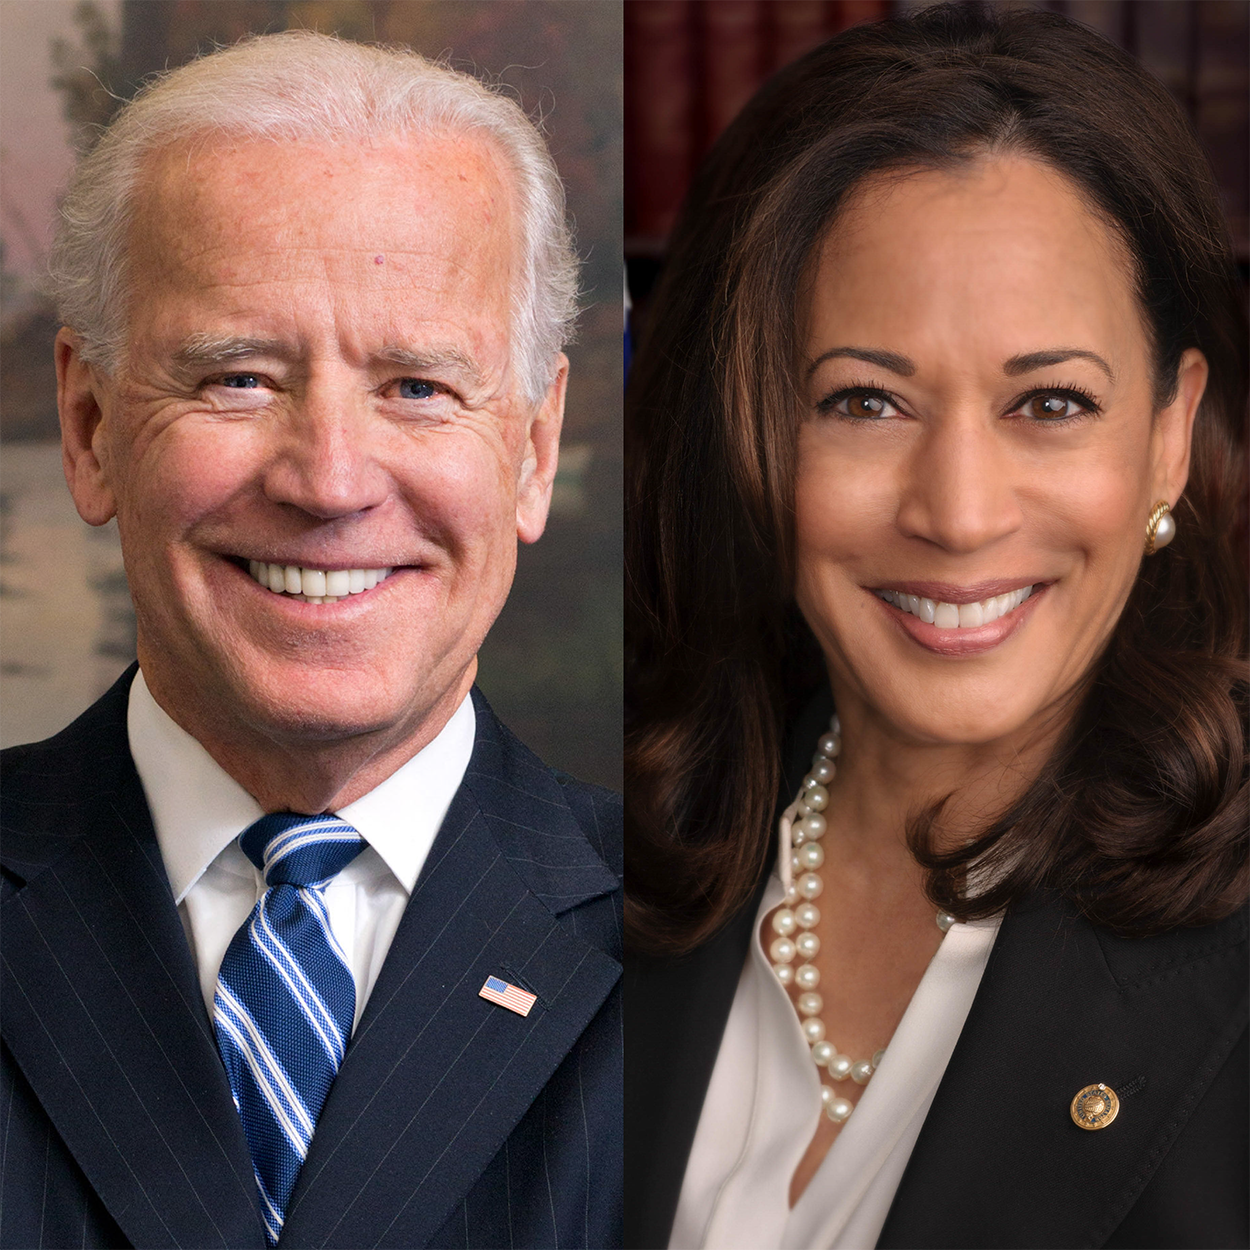 U.S President Biden will transfer power to Vice President Kamala Harris